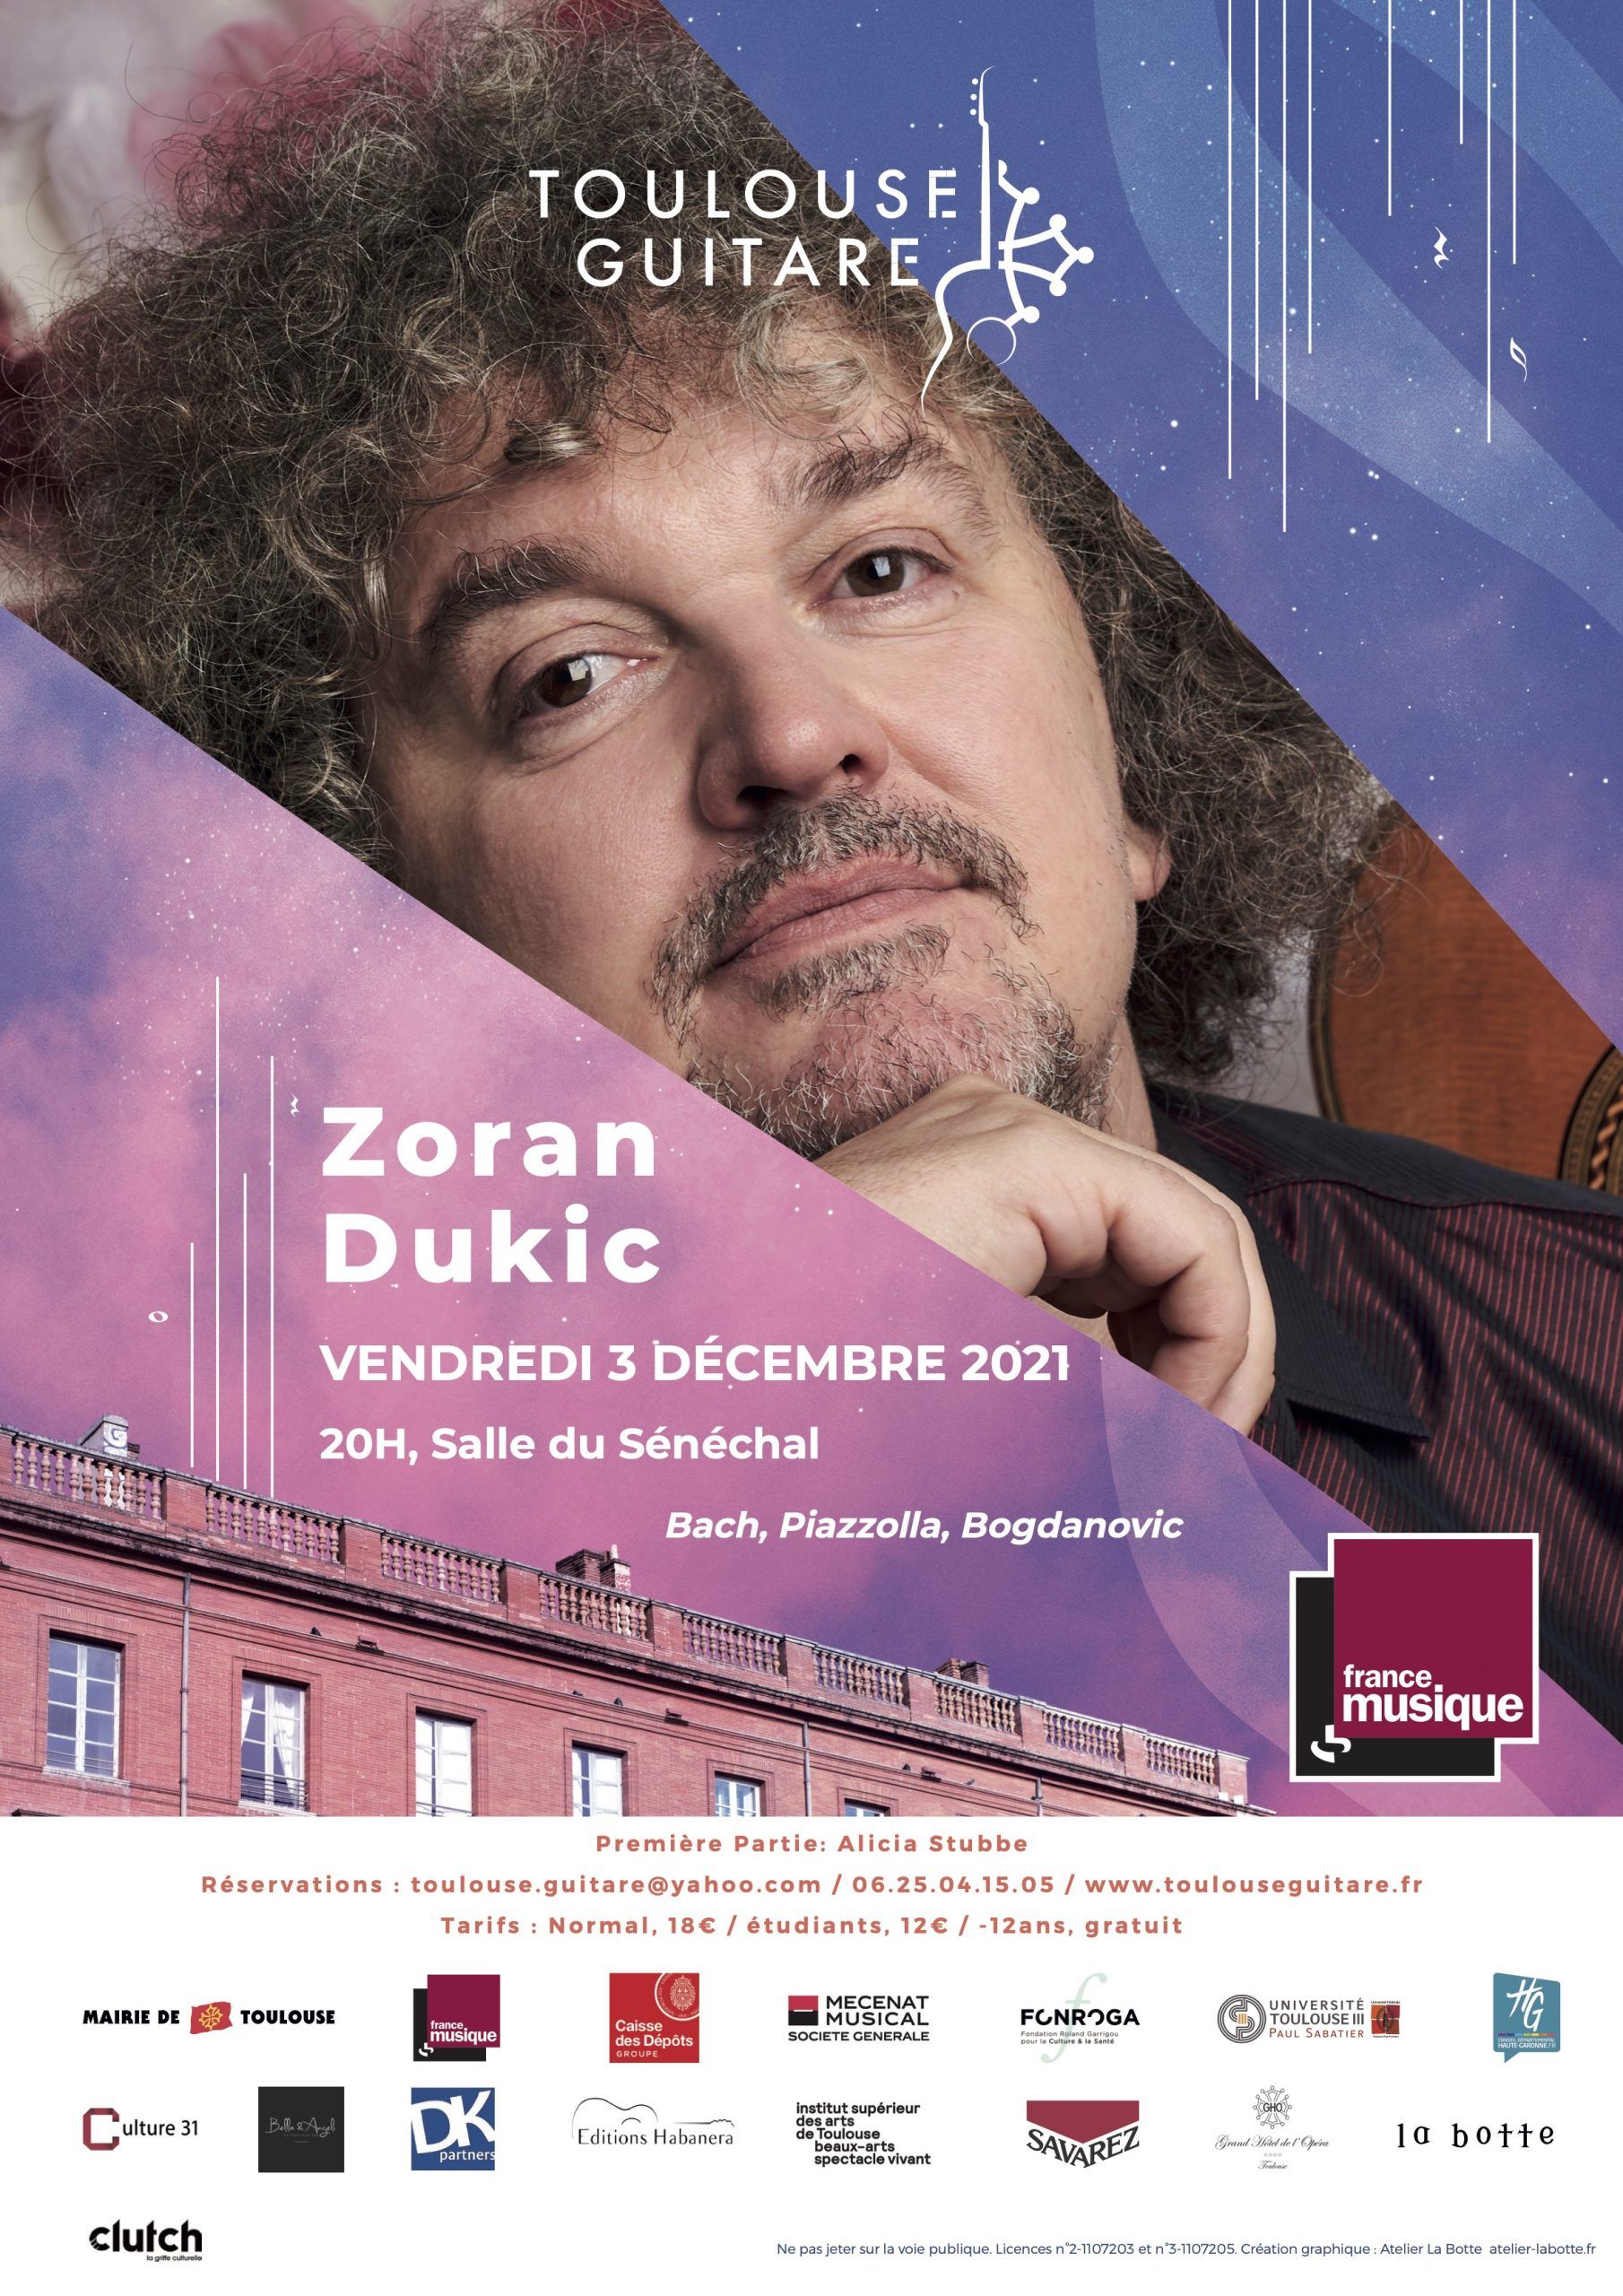 Toulouse Guitare - Zoran Dukic